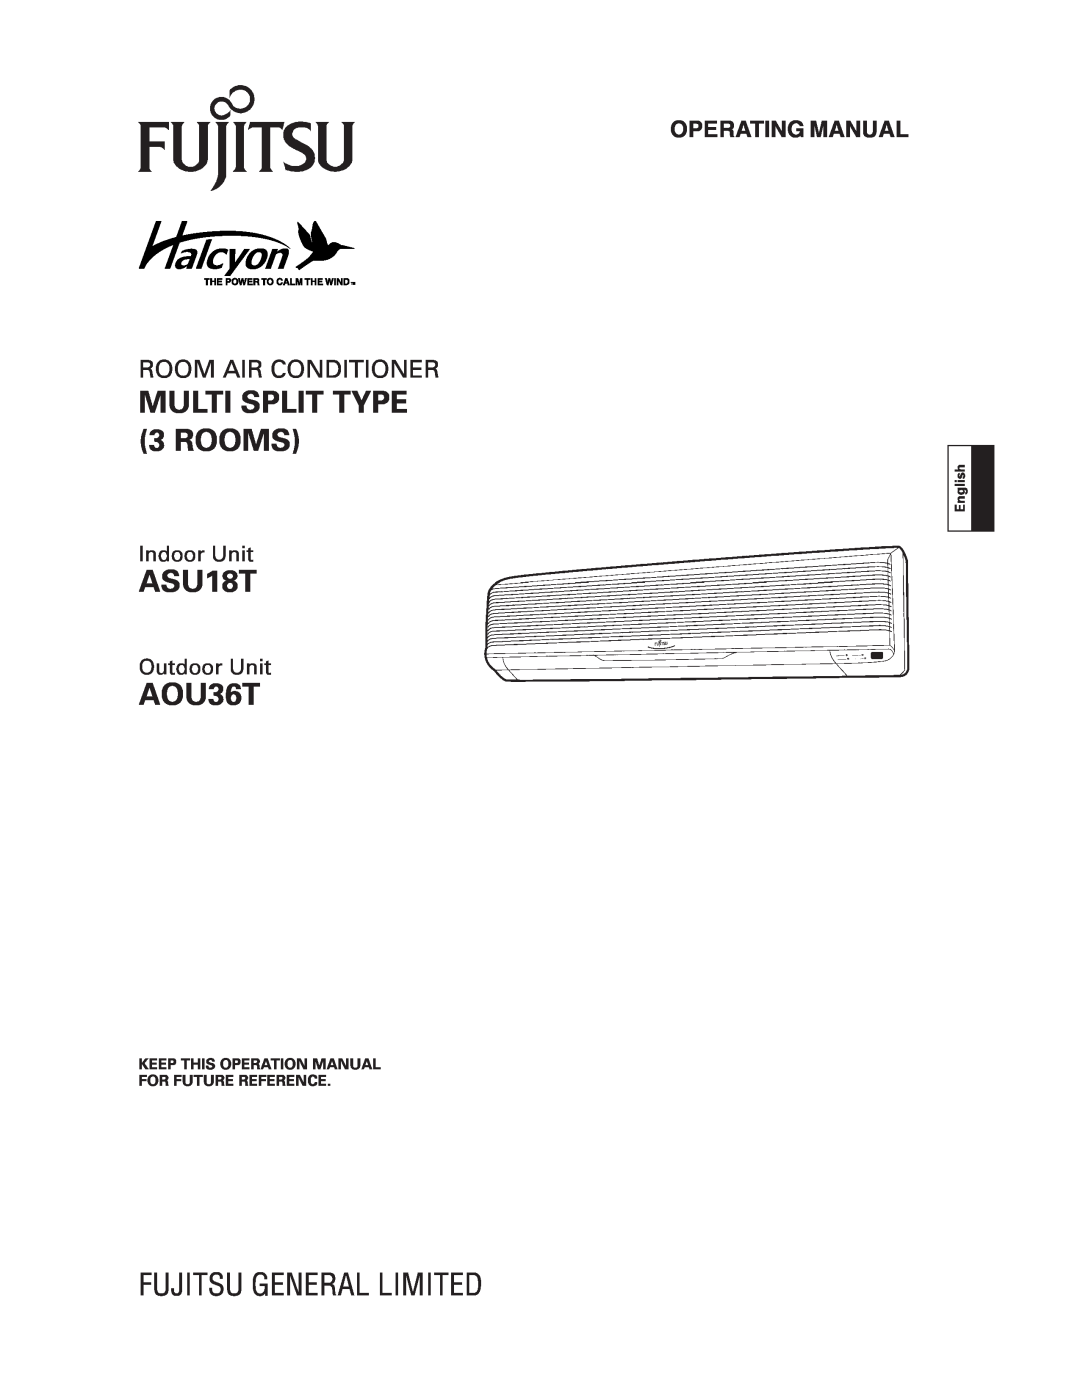 Fujitsu AOU36T operation manual MULTI SPLIT TYPE 3 ROOMS, ASU18T, Room Air Conditioner, Indoor Unit, Outdoor Unit, English 